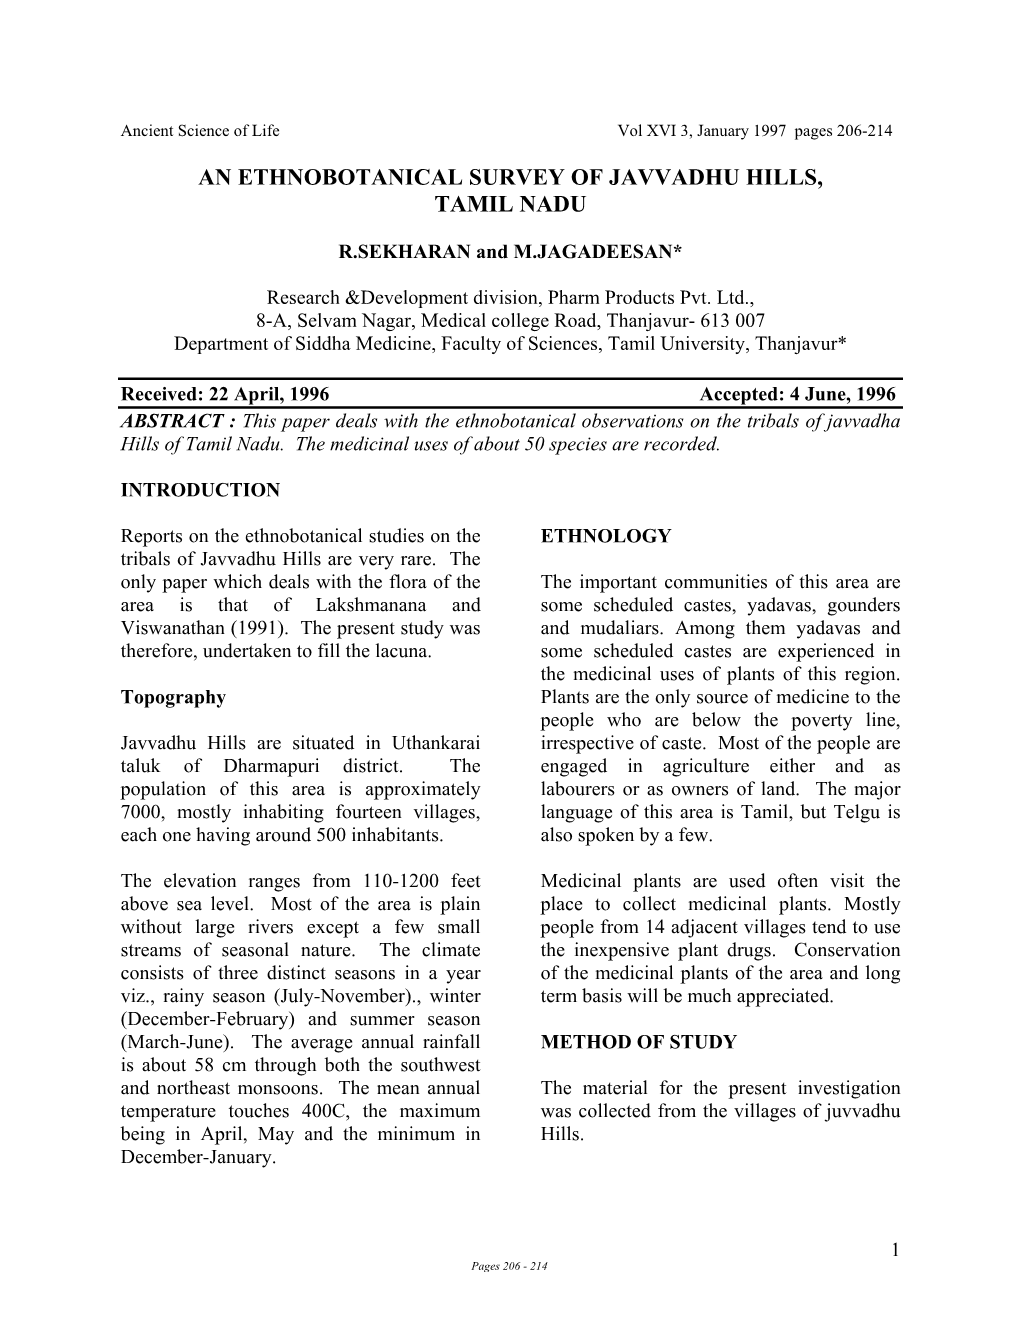 An Ethnobotanical Survey of Javvadhu Hills, Tamil Nadu